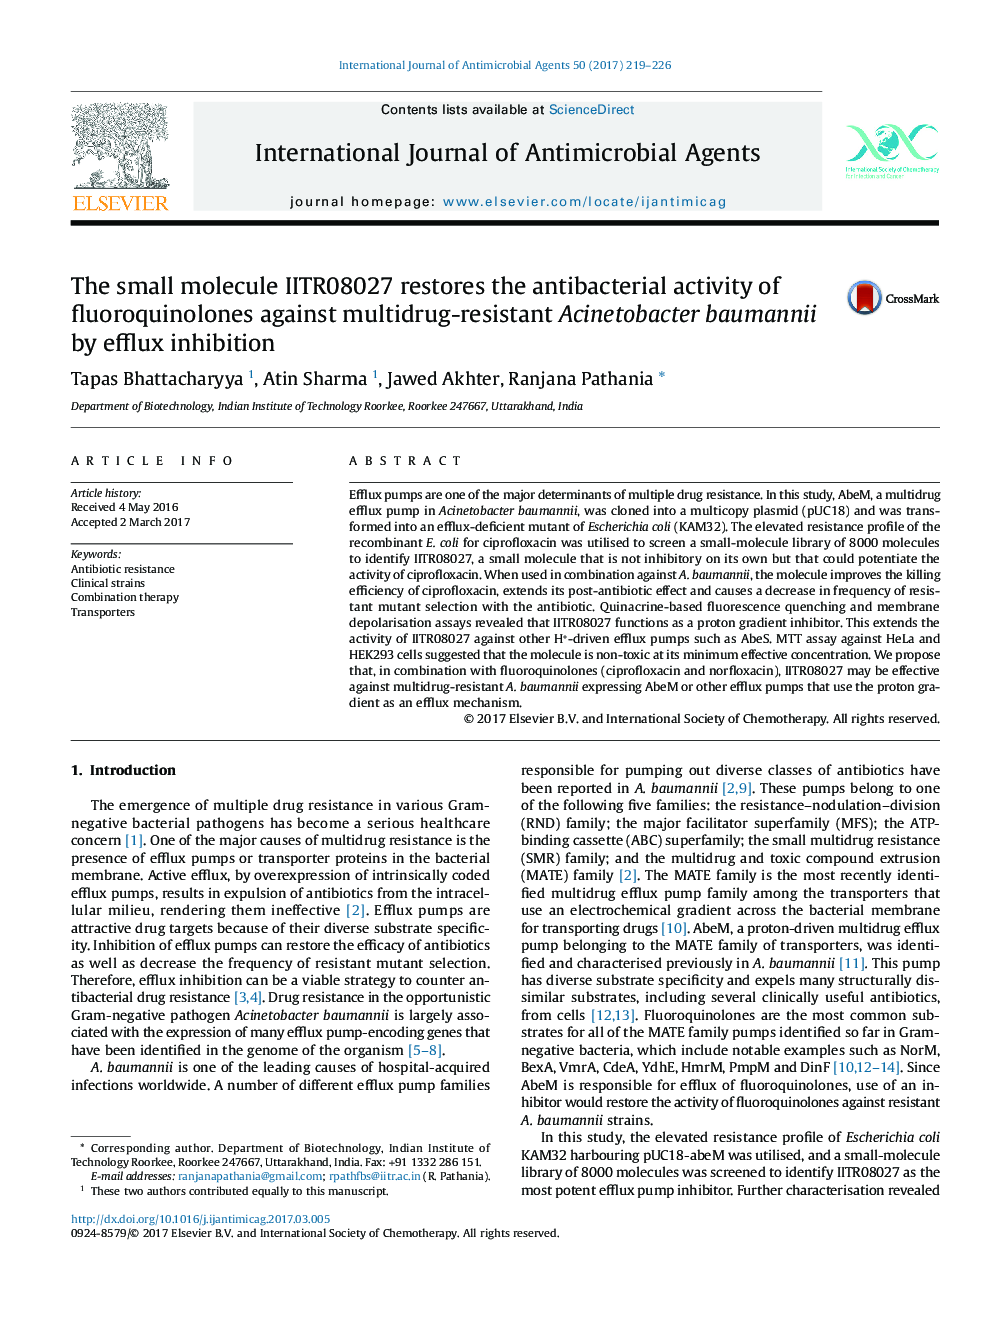 The small molecule IITR08027 restores the antibacterial activity of fluoroquinolones against multidrug-resistant Acinetobacter baumannii by efflux inhibition